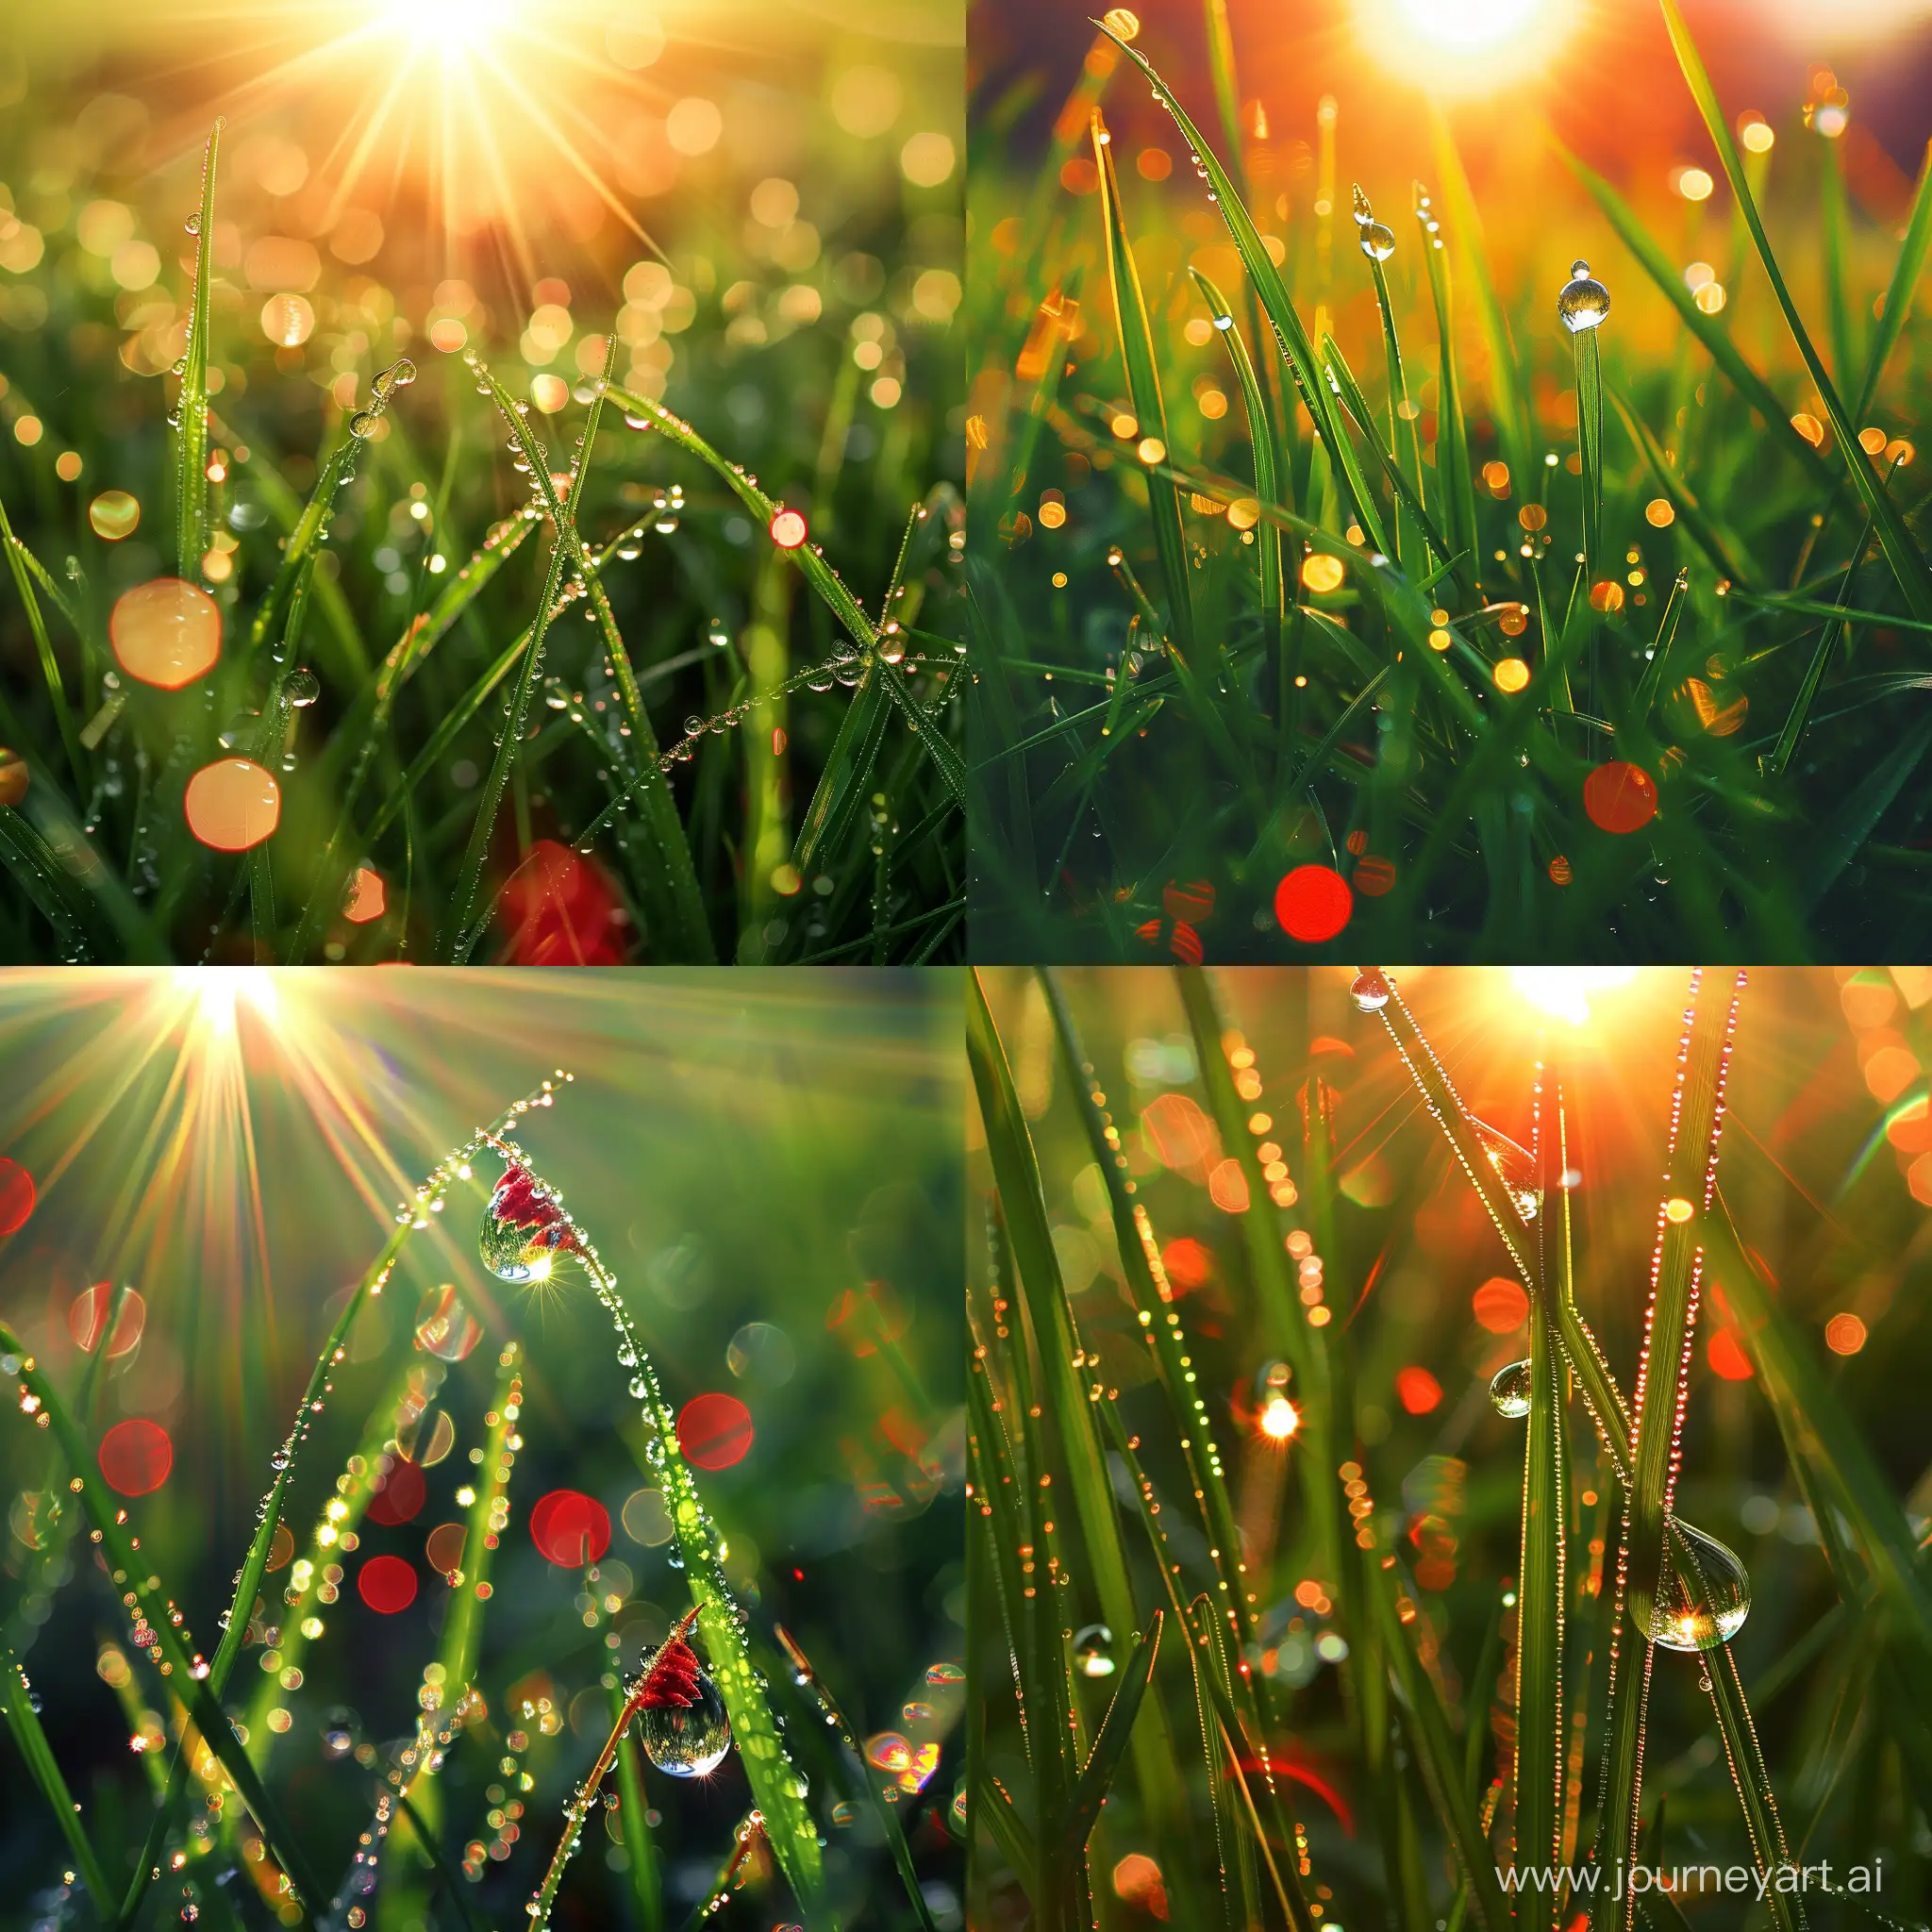 Captivating-Sunlit-Dew-Drops-on-Grassy-Blades